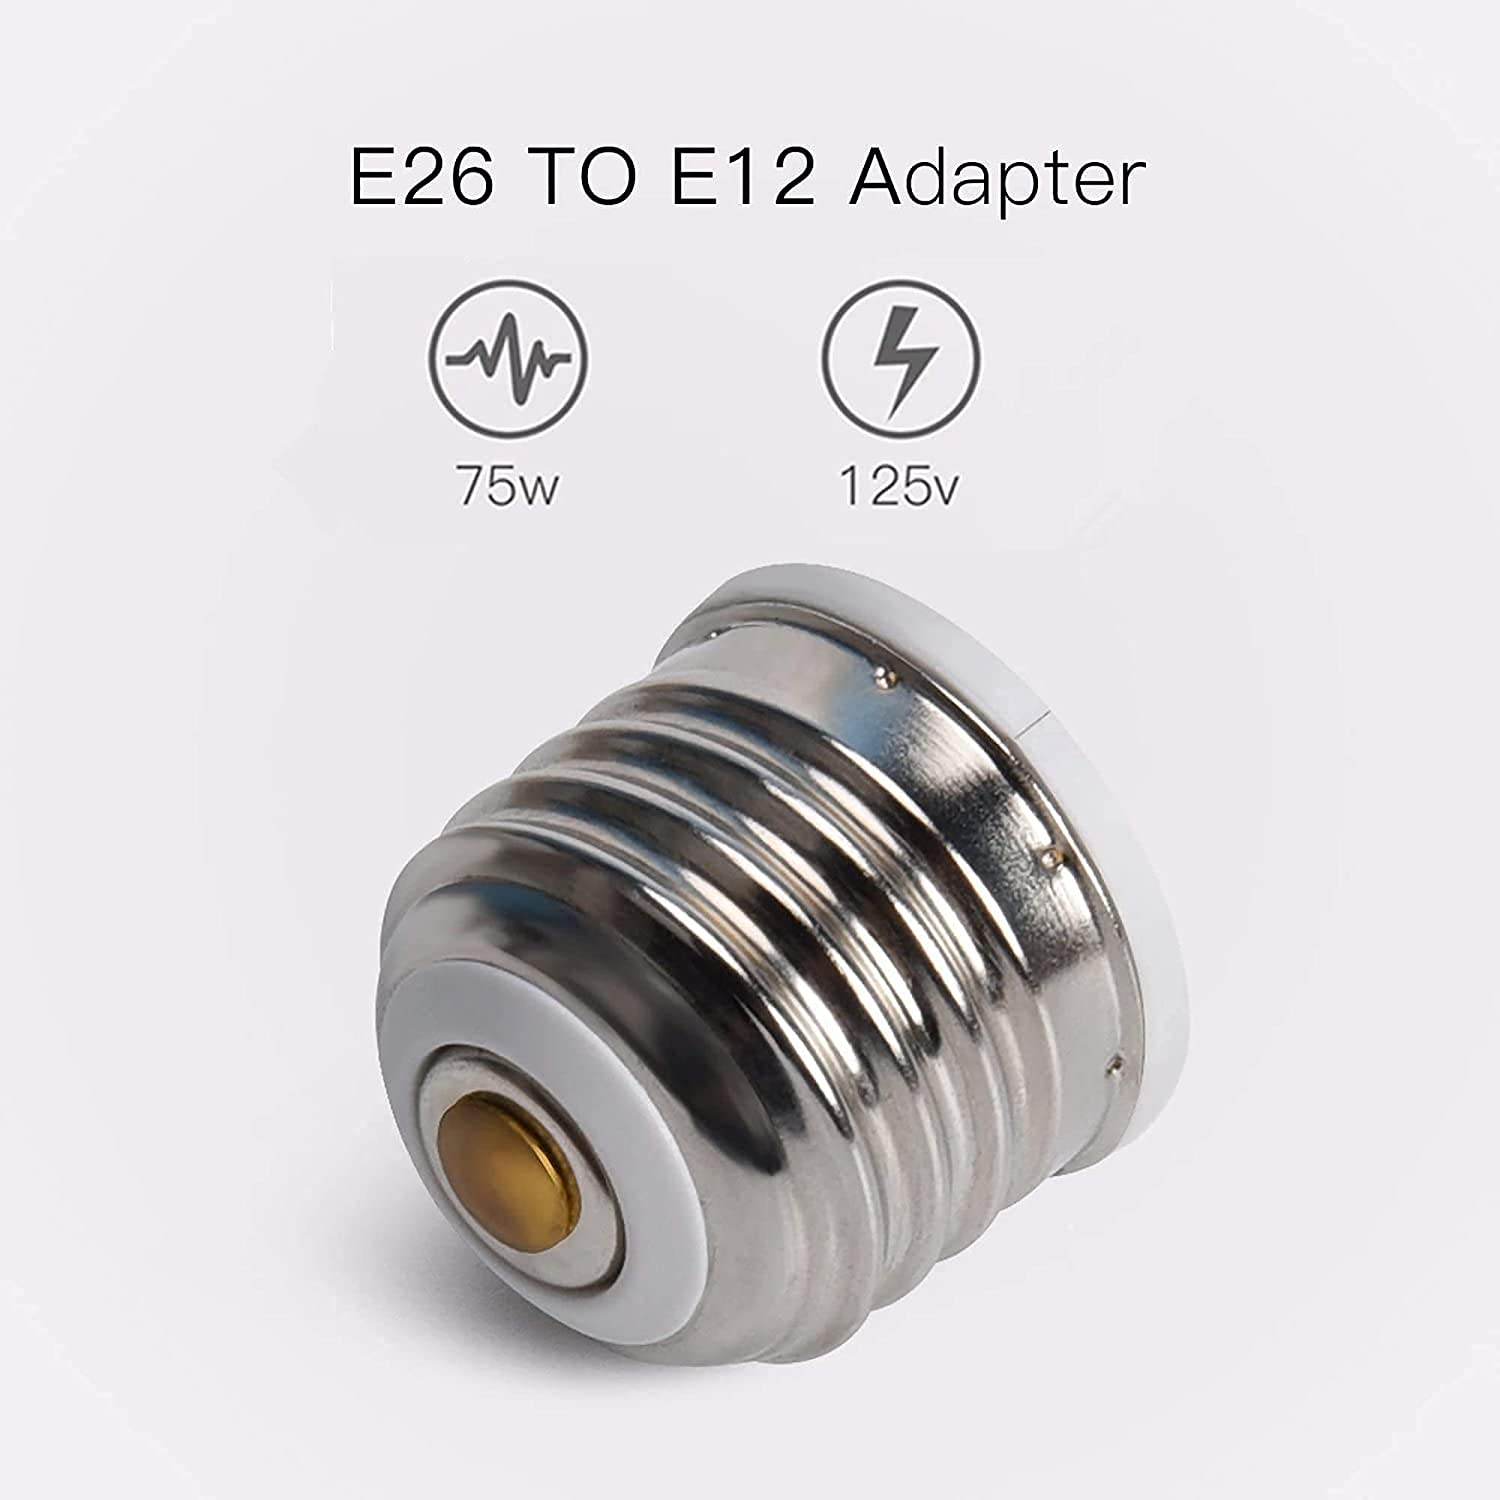 UL-listed E26 to E12 Adapter 75W 250V 6/12 Pack